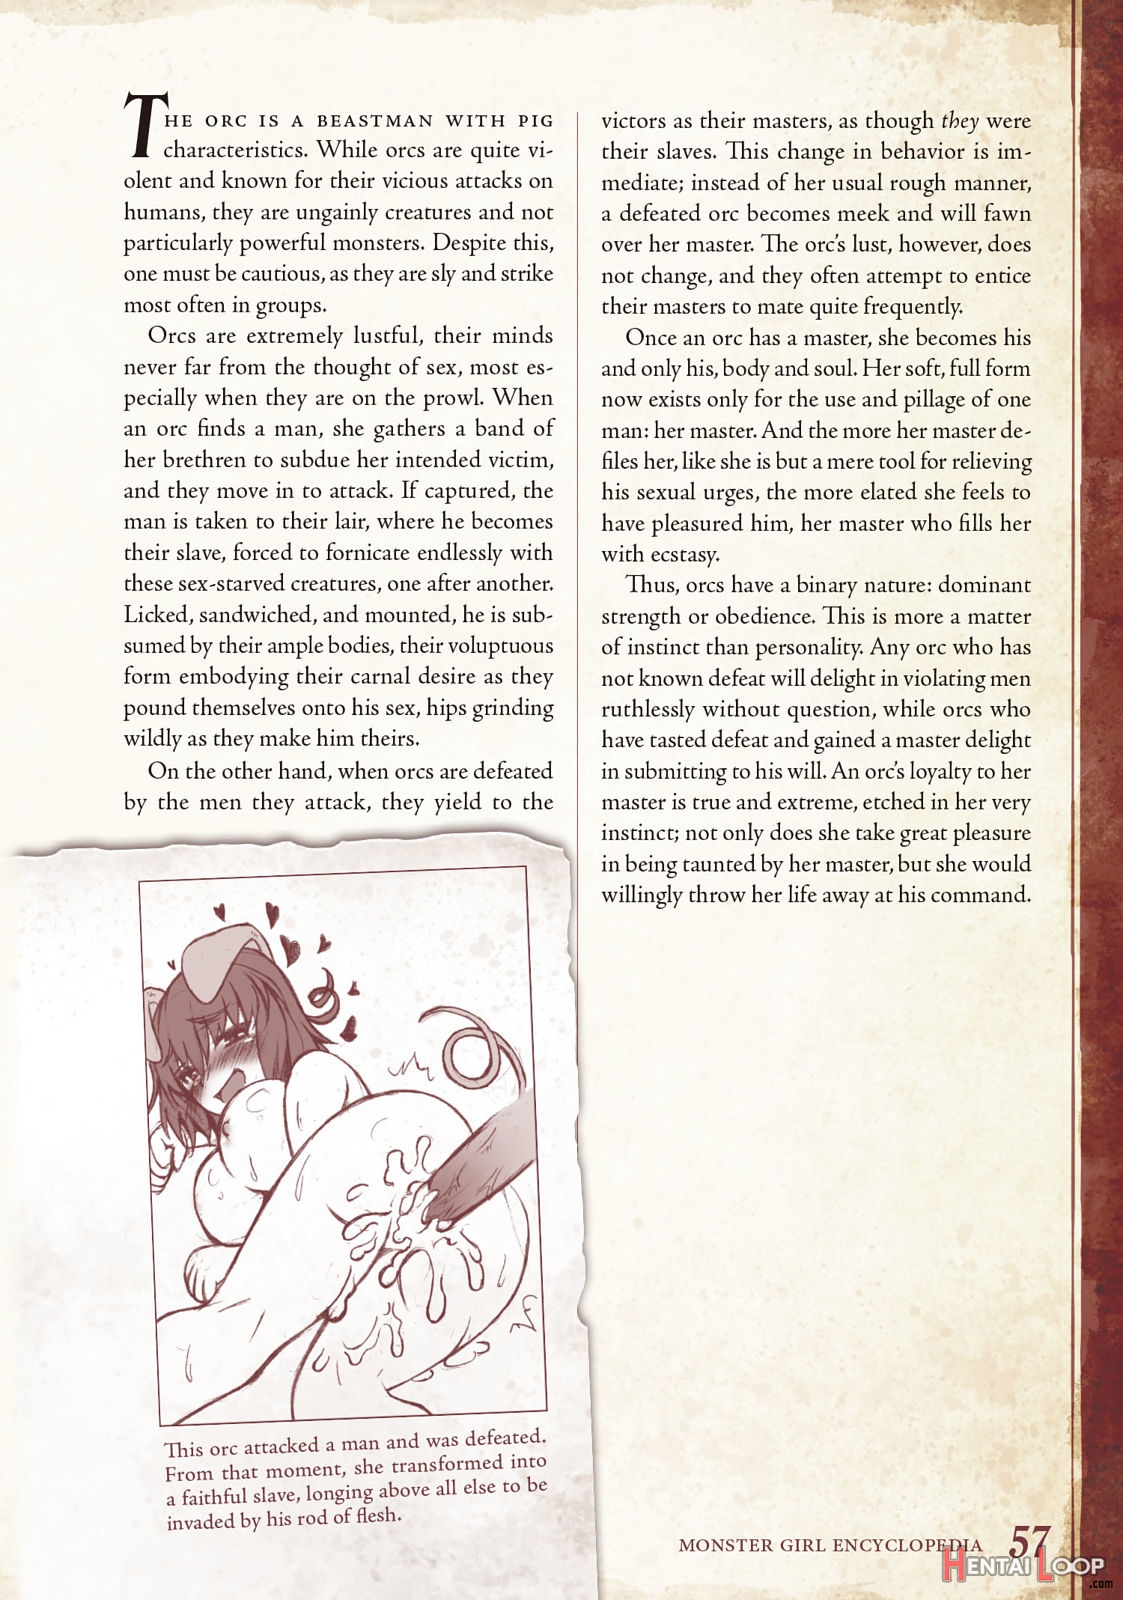 Monster Girl Encyclopedia Vol. 1 page 58